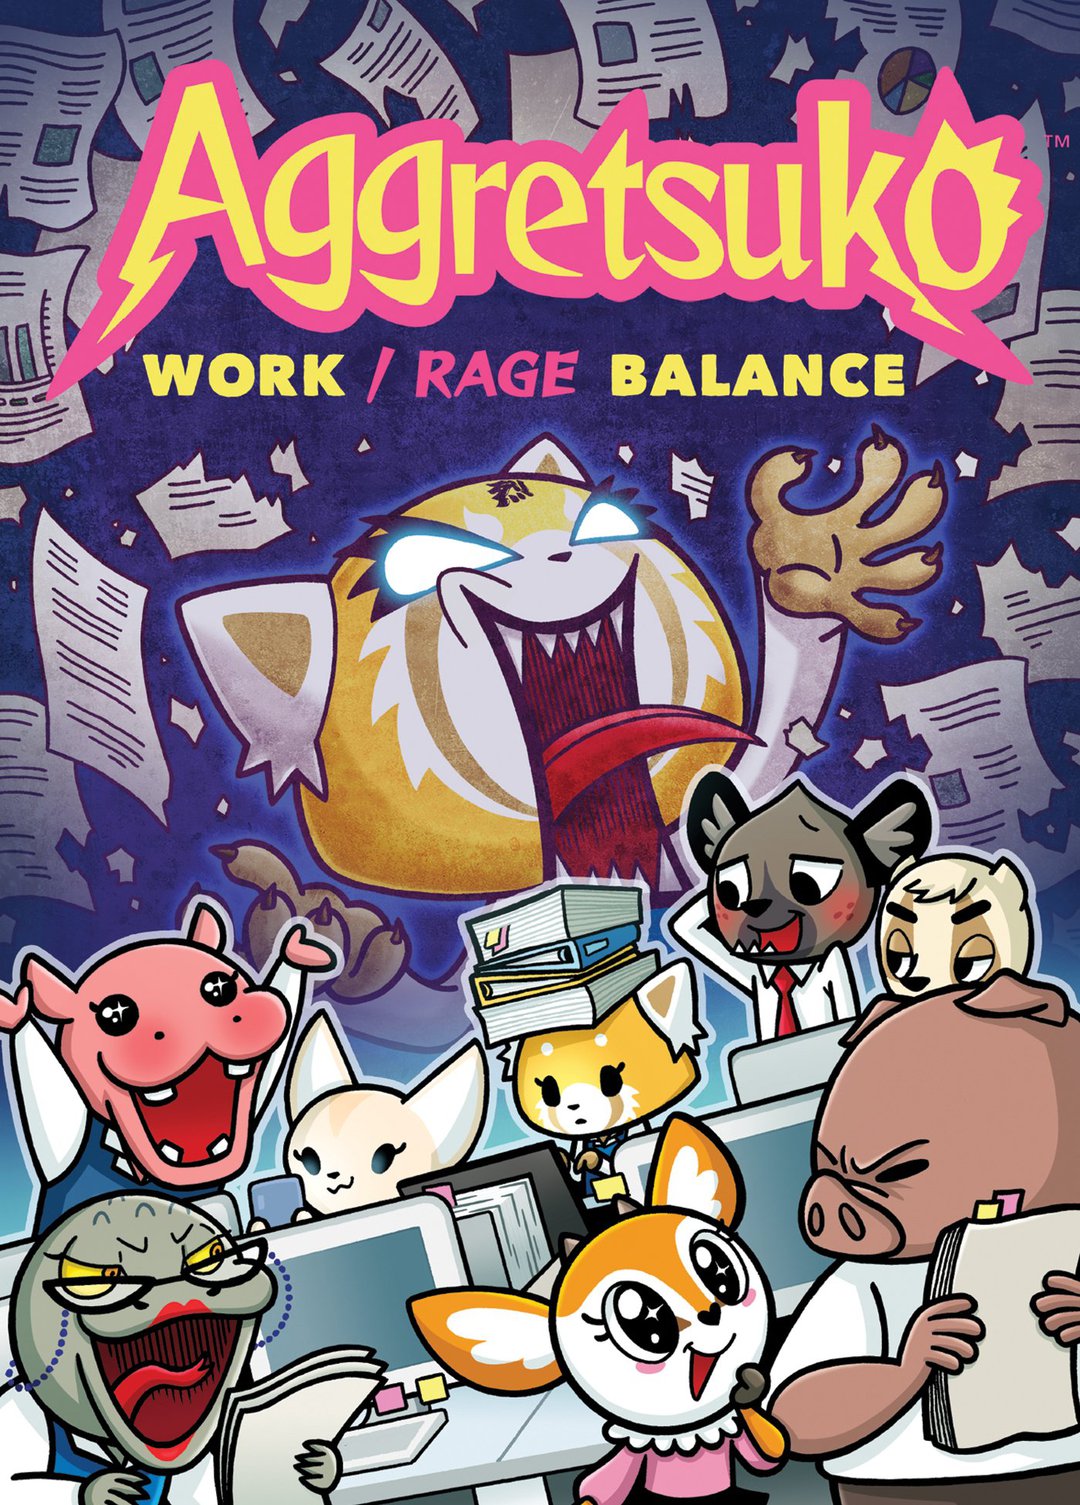 Aggretsuko board game review.jpg